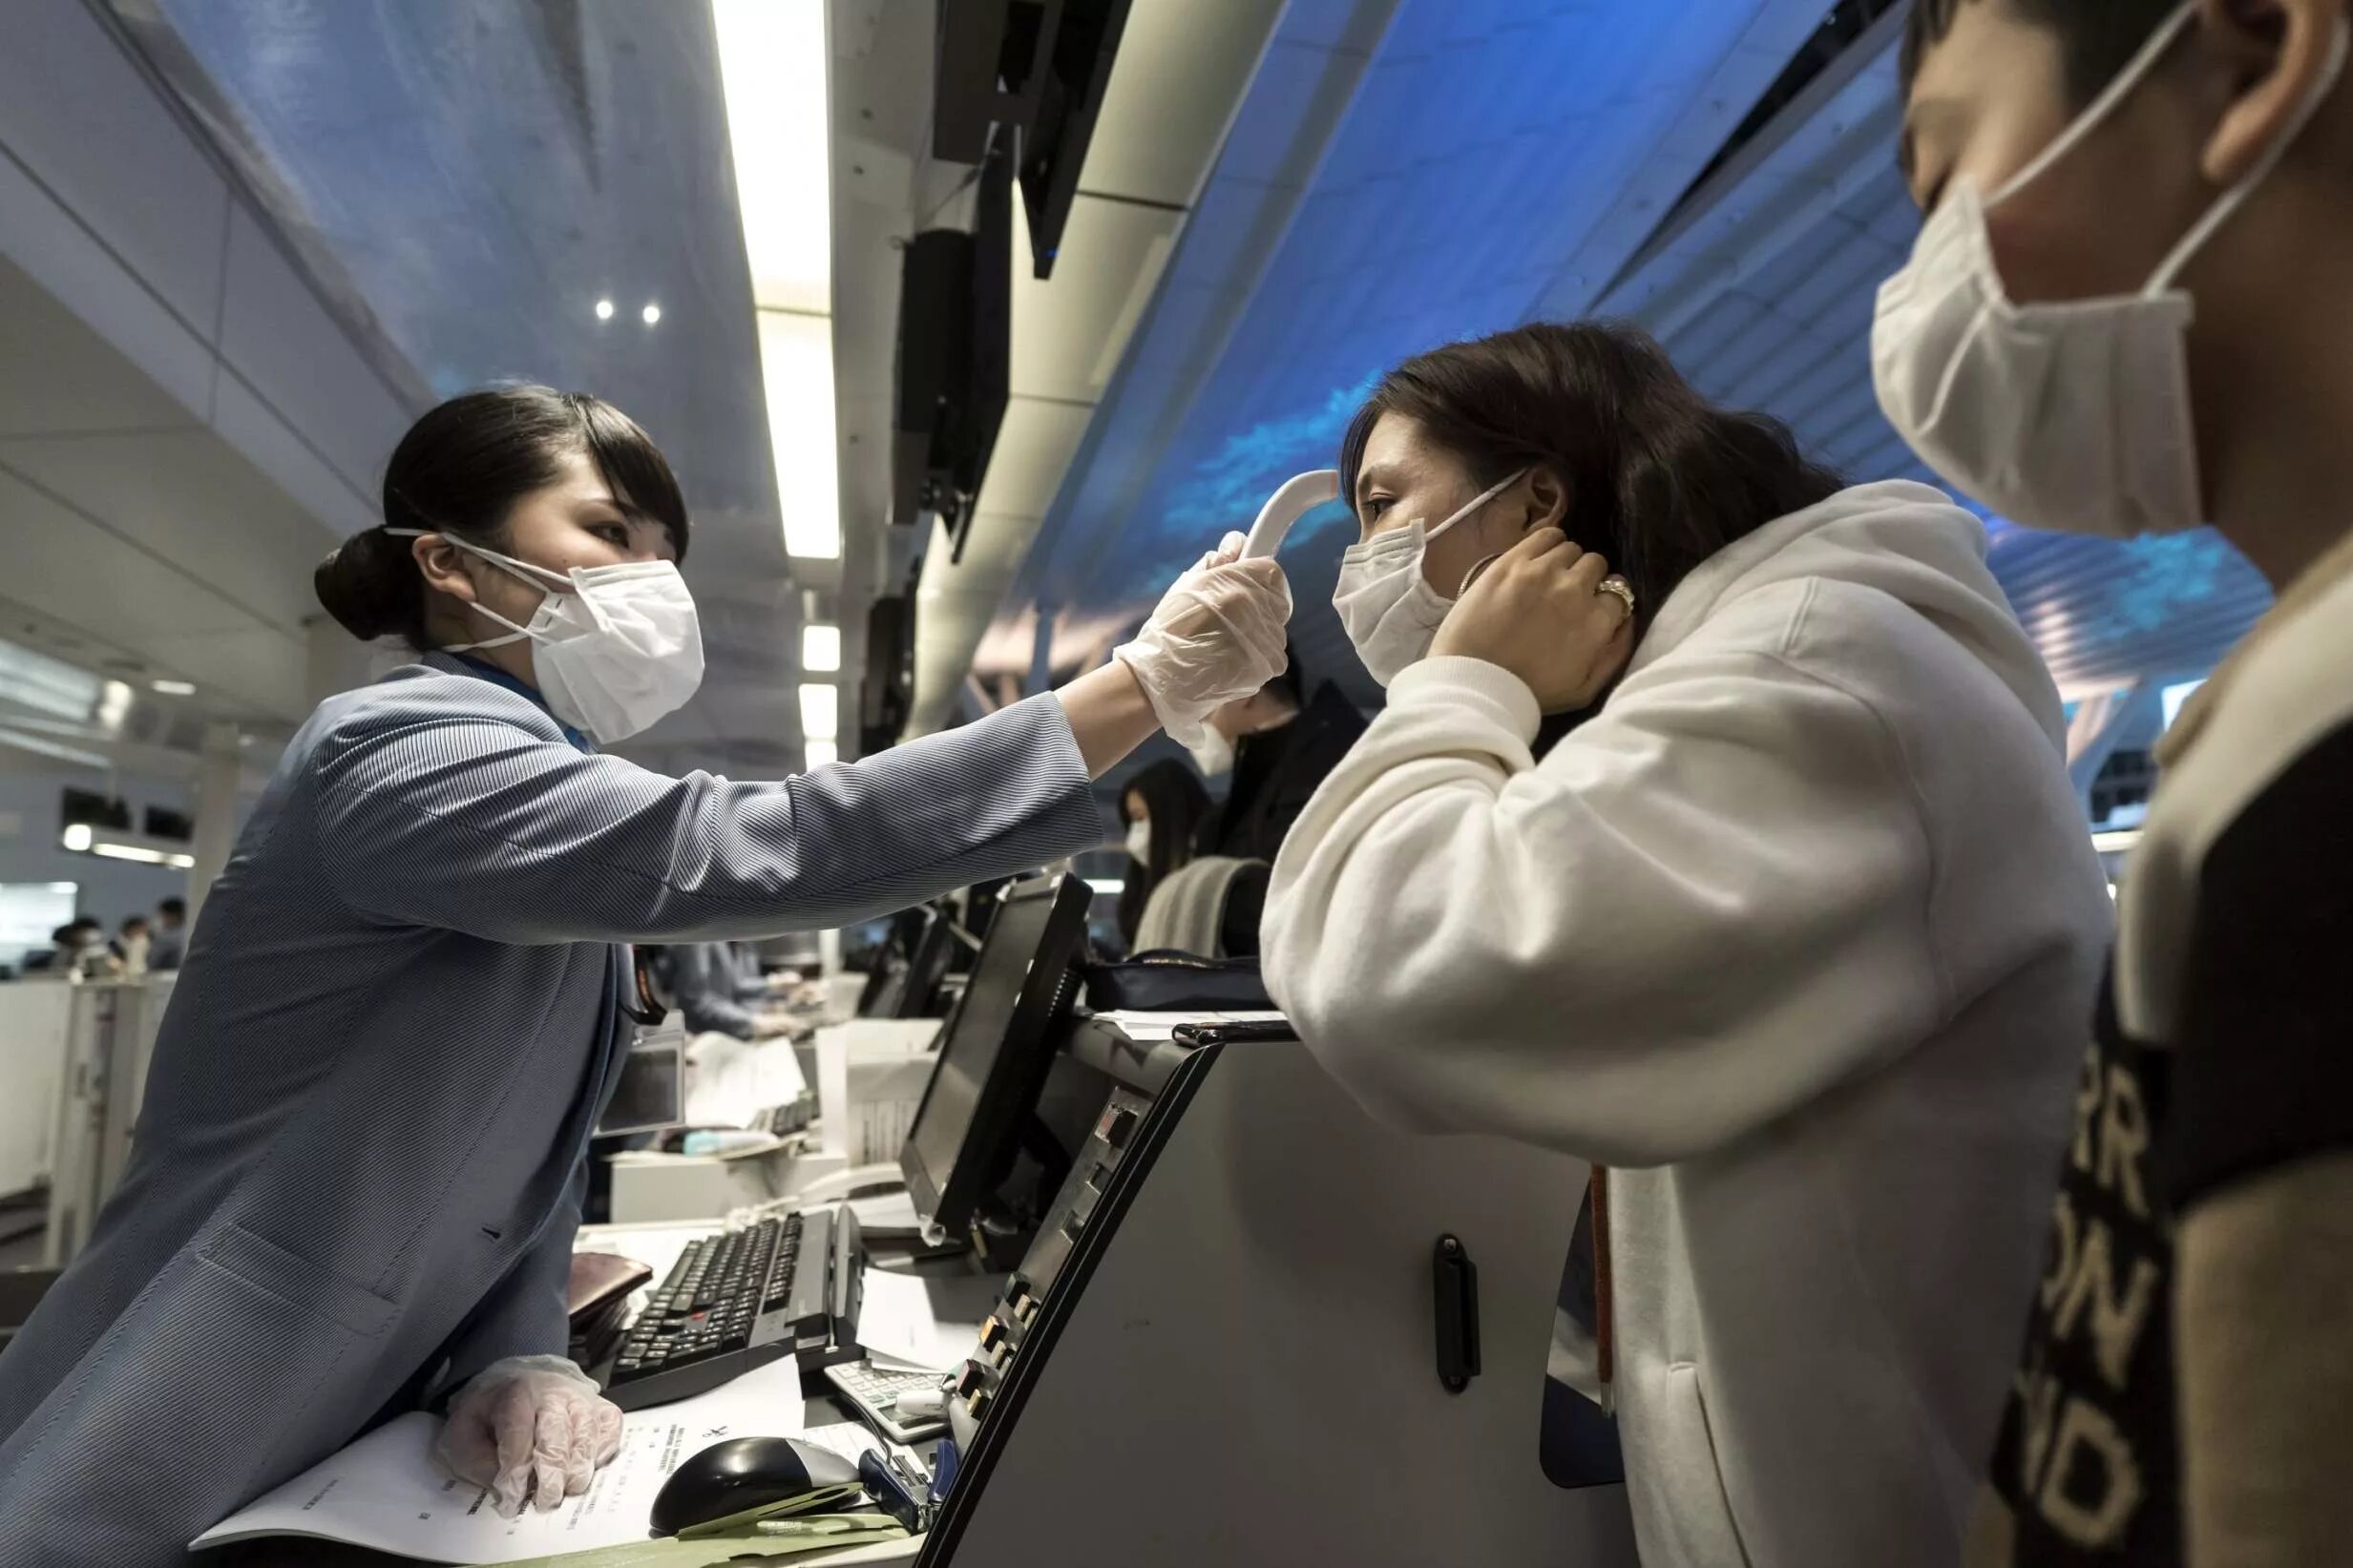 Токио коронавирус. Япония аэропорт люди. Бизнес и коронавирус картинки.